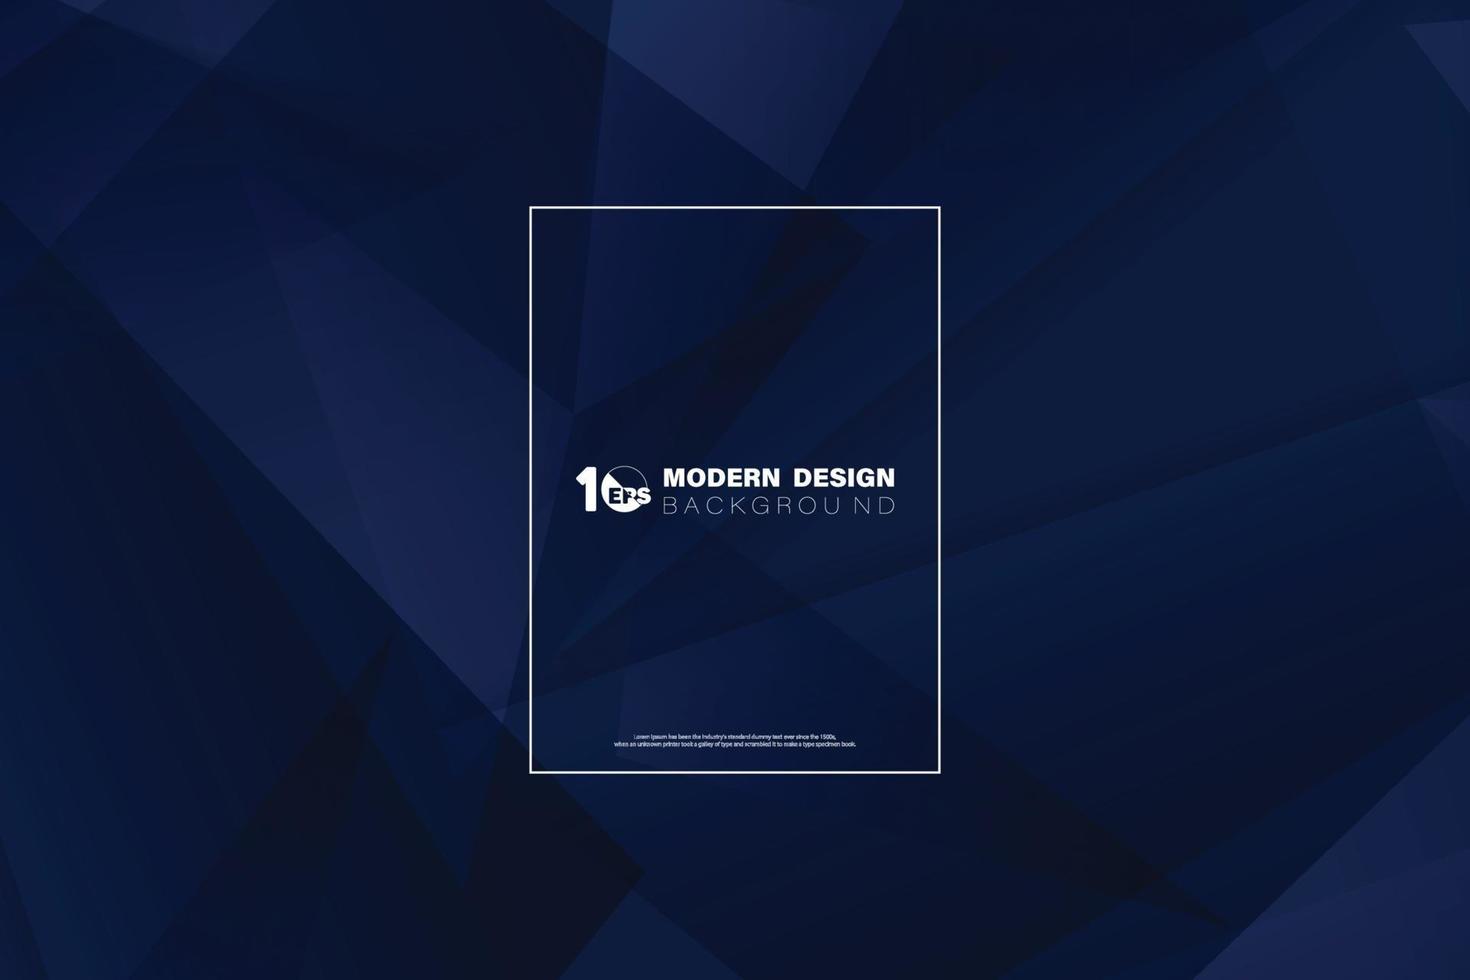 Abstract blue tech design background of modern digital technology design. illustration vector eps10